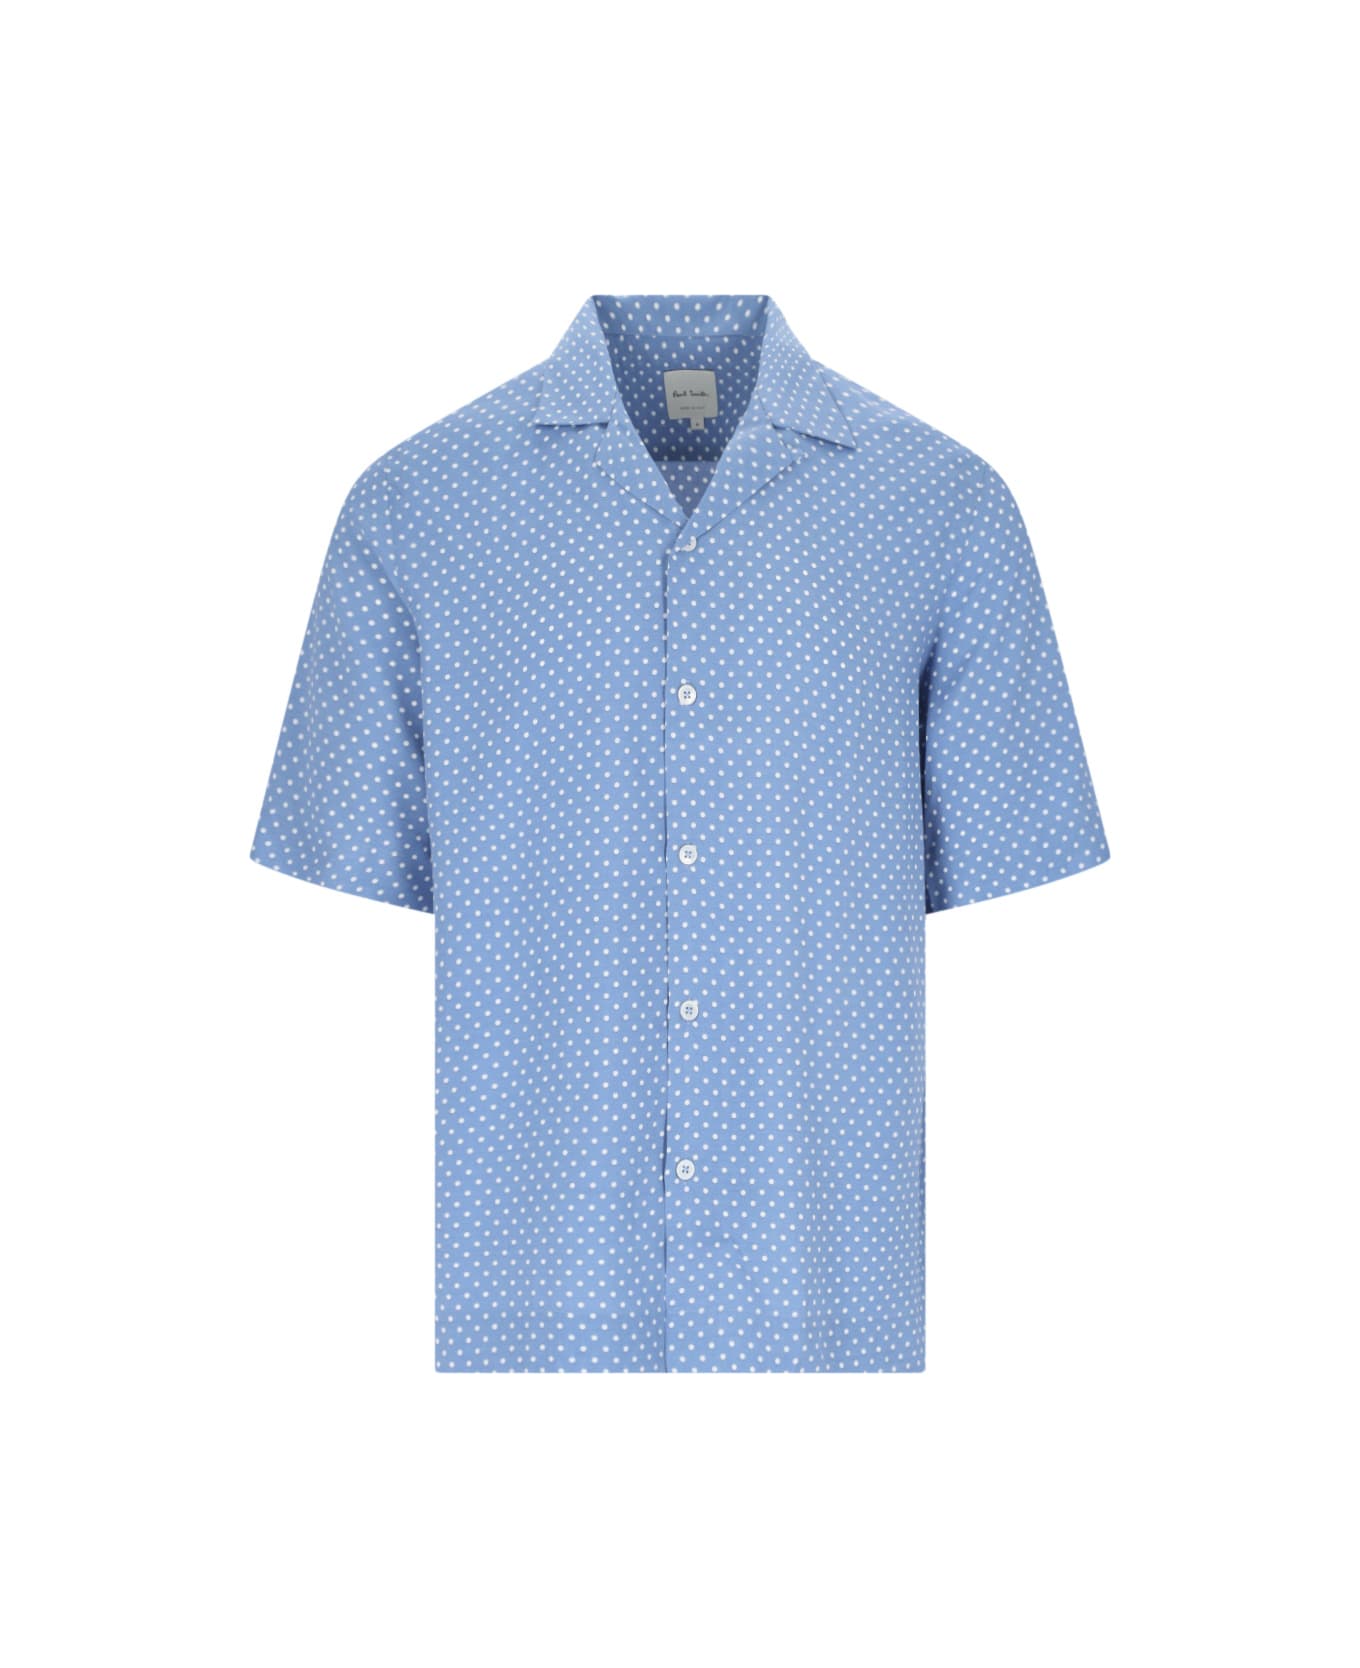 Paul Smith Polka Dot Shirt - Light Blue